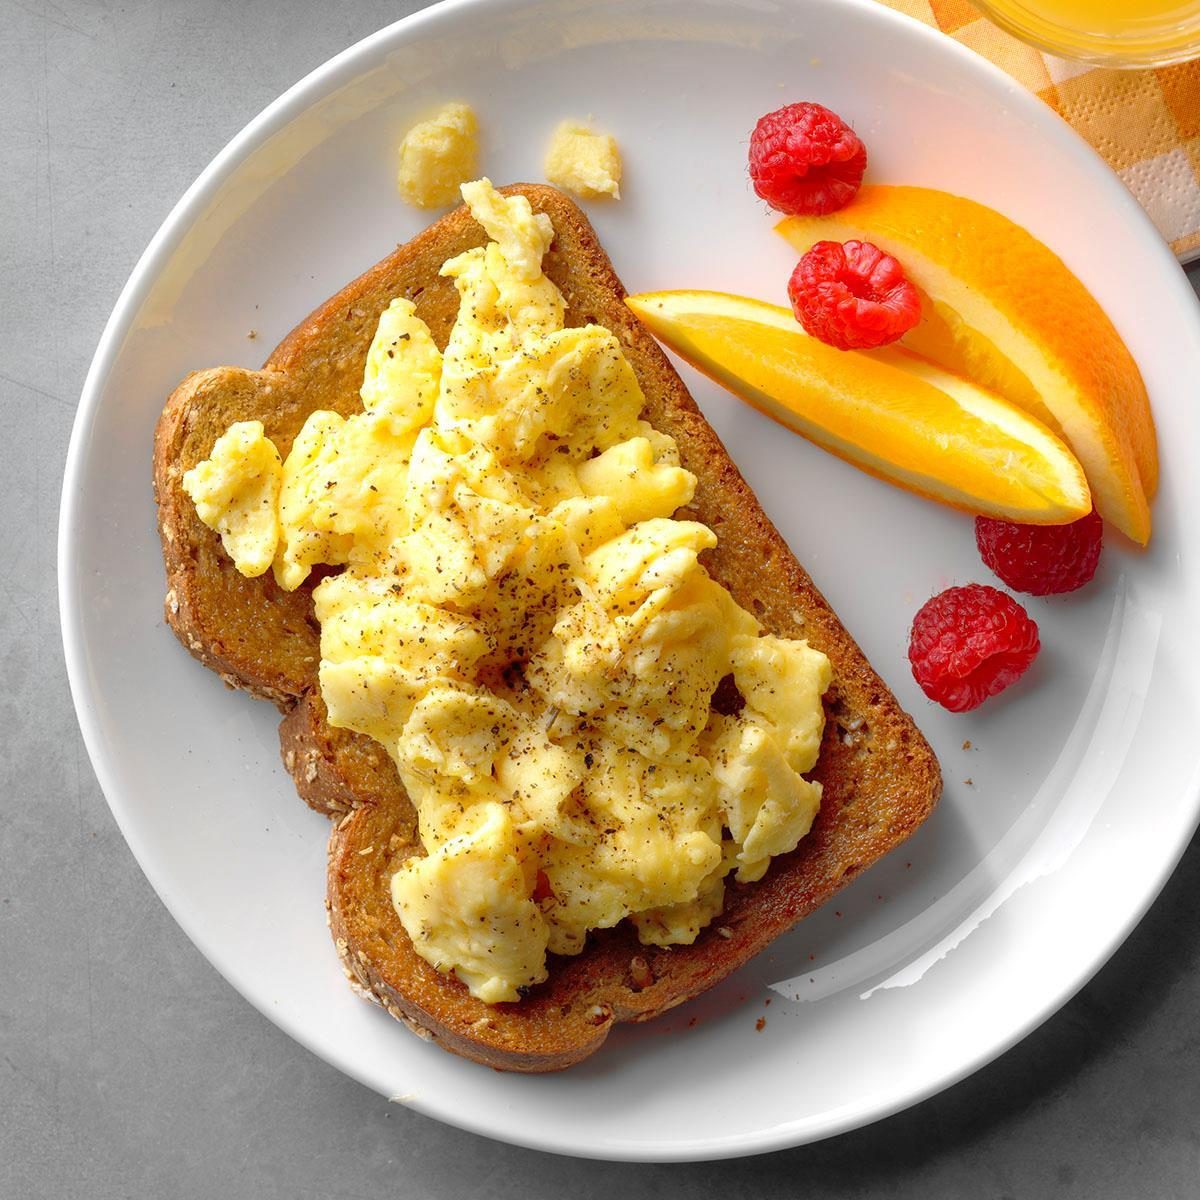 Monday Breakfast: Open-Faced Egg Sandwiches